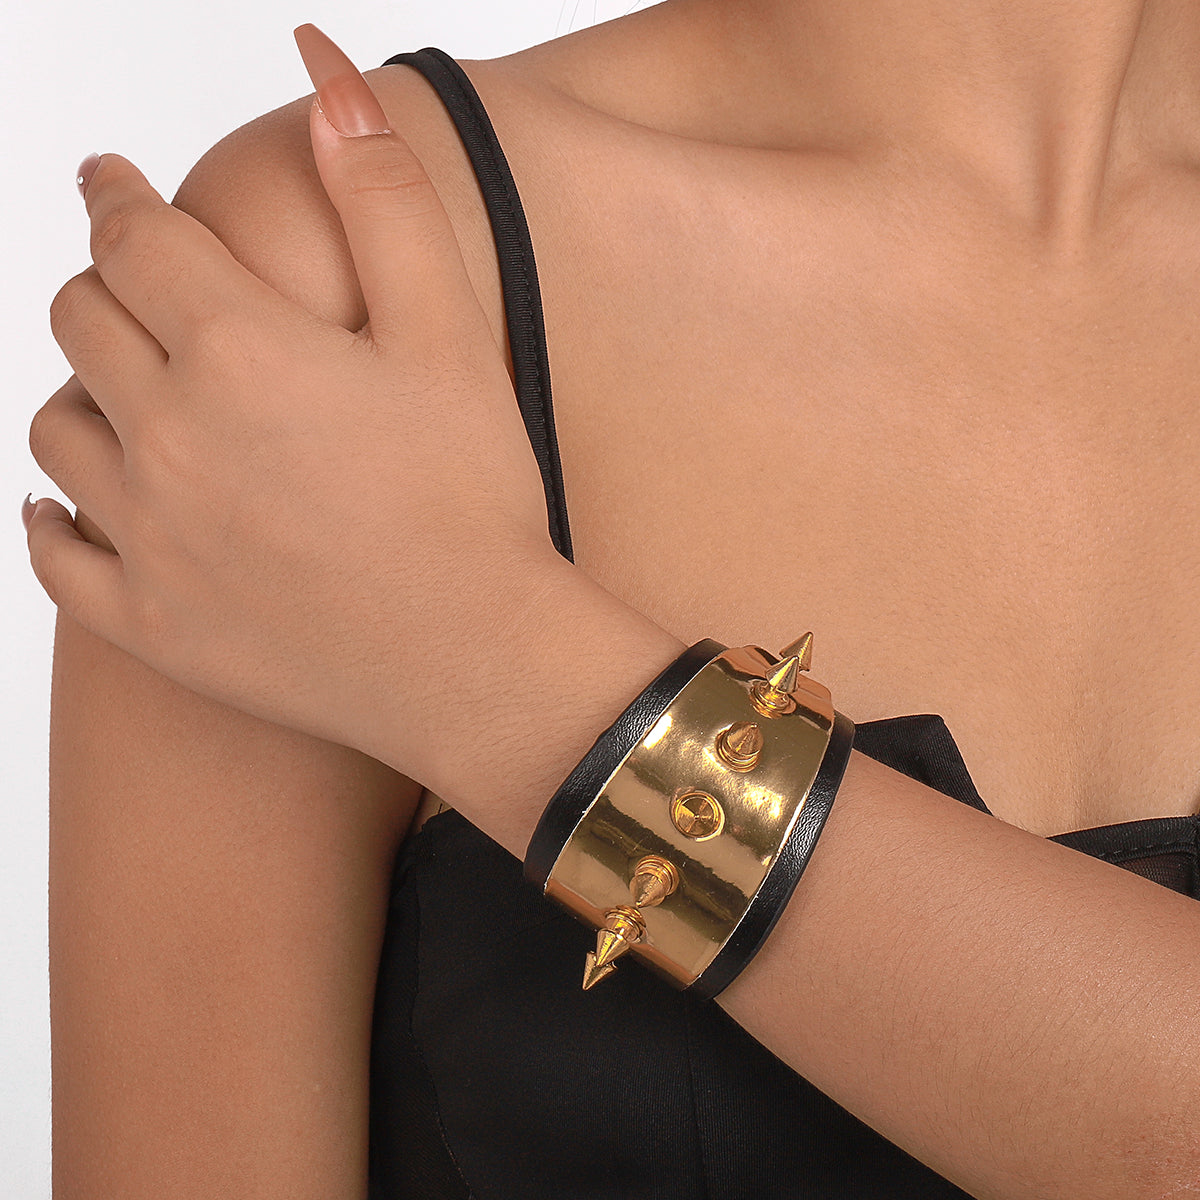 Gold Rivet Wide Cuff Leather Bracelet medyjewelry